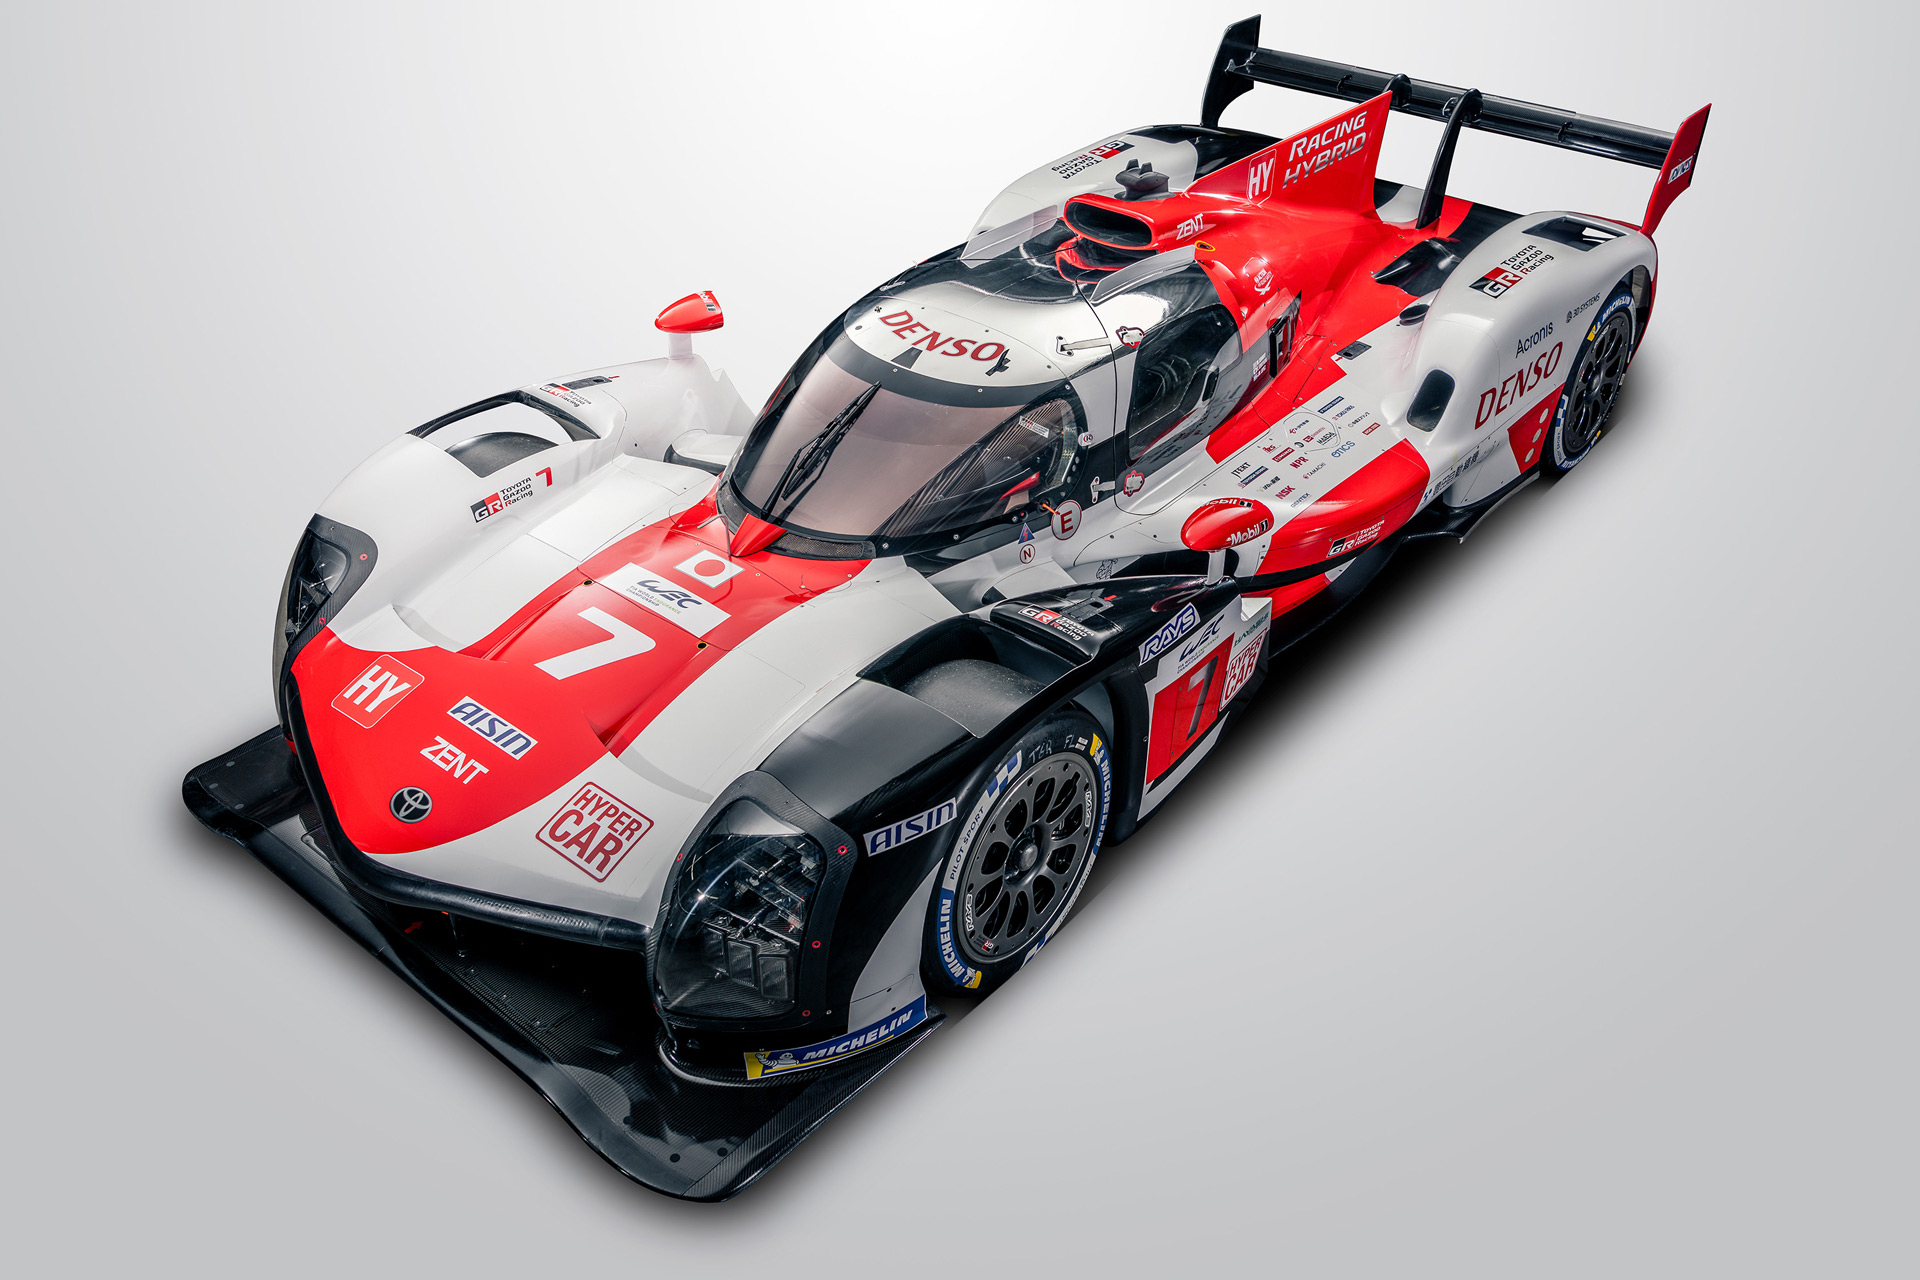 2021 Toyota GR010 Hybrid Le Mans Hypercar racer revealed, road car to